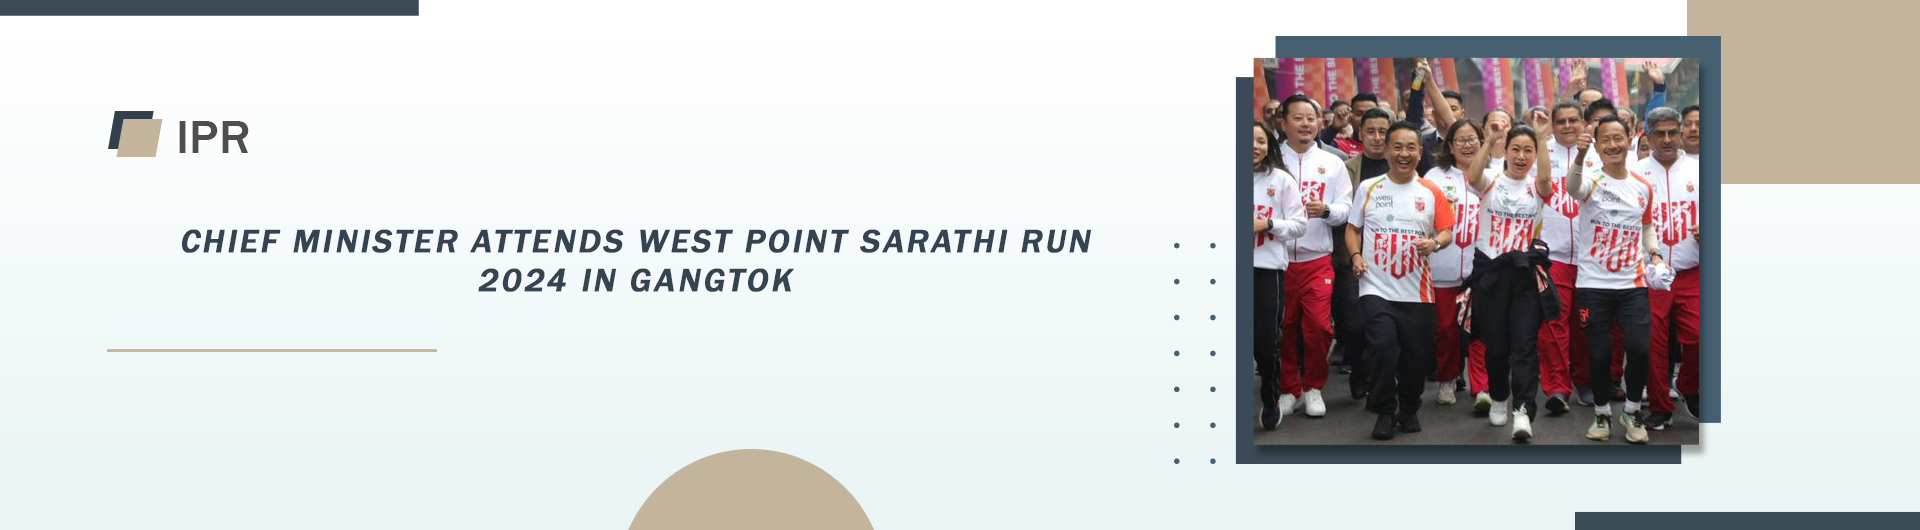 Chief Minister attends West Point Sarathi Run 2024 in Gangtok 